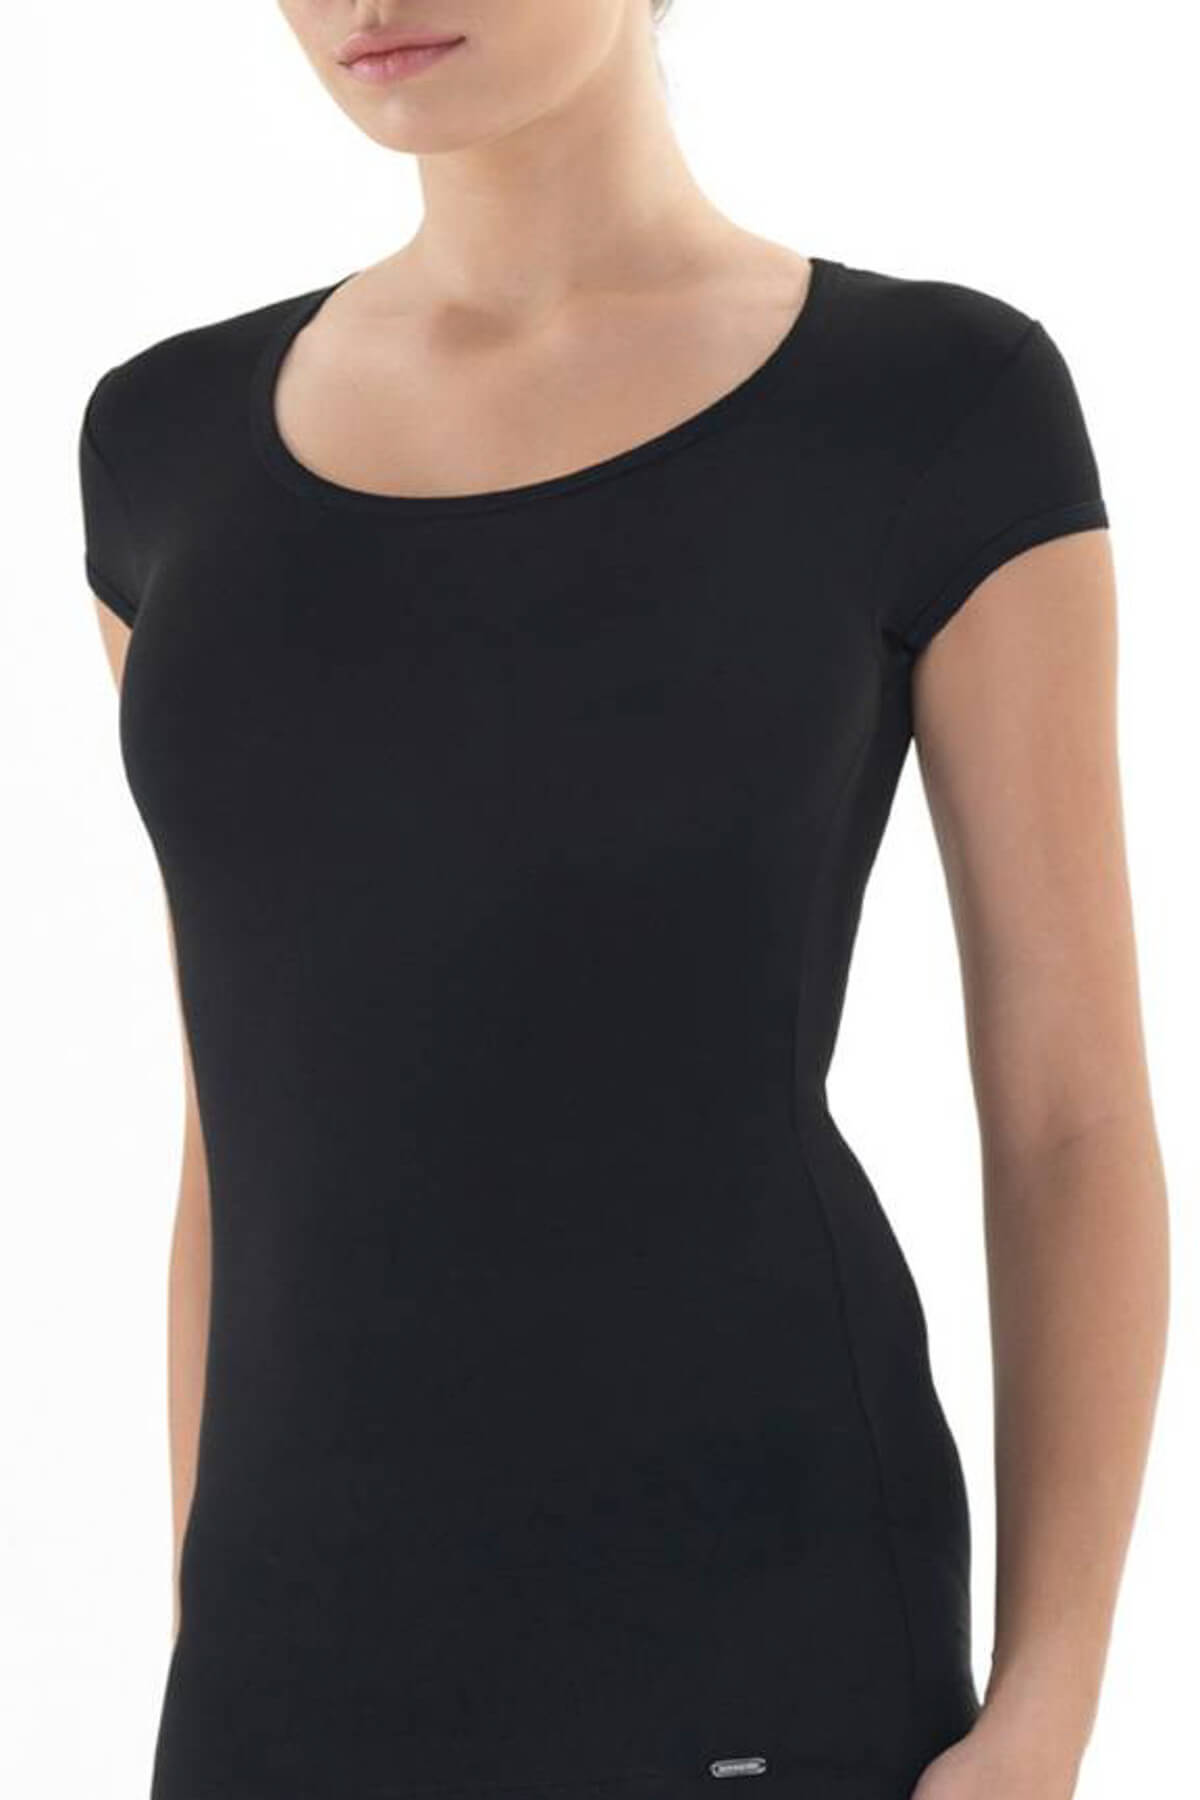 Blackspade Kadın Siyah T-Shirt 1622